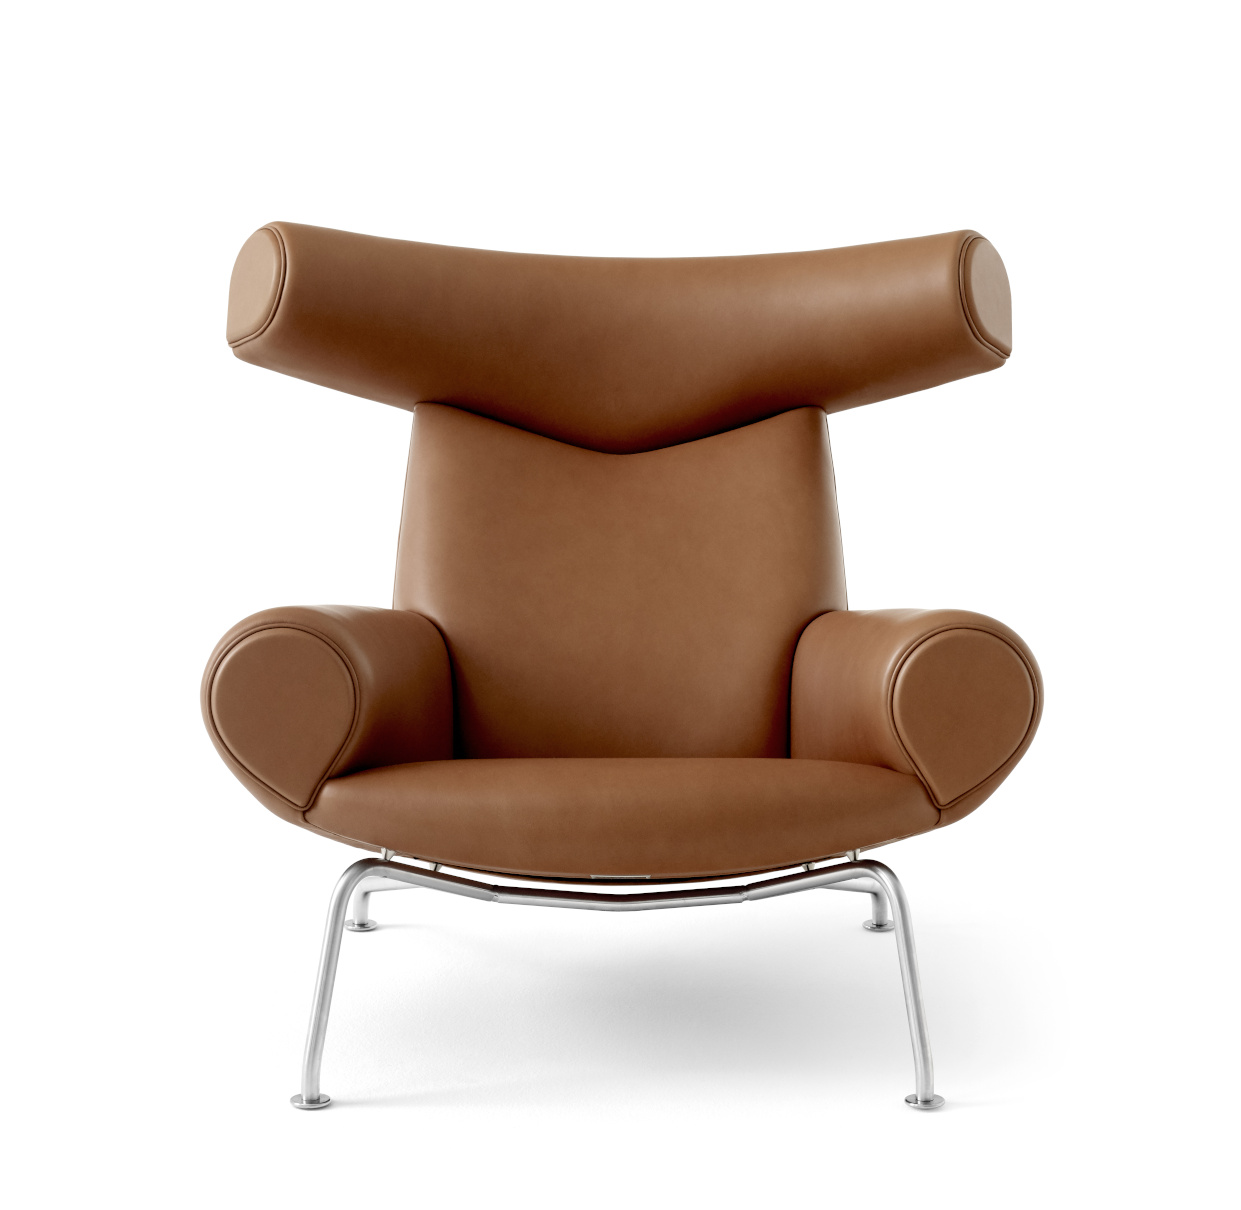 Wegner Ox Chair, brushed steel / leder max 95 cognac